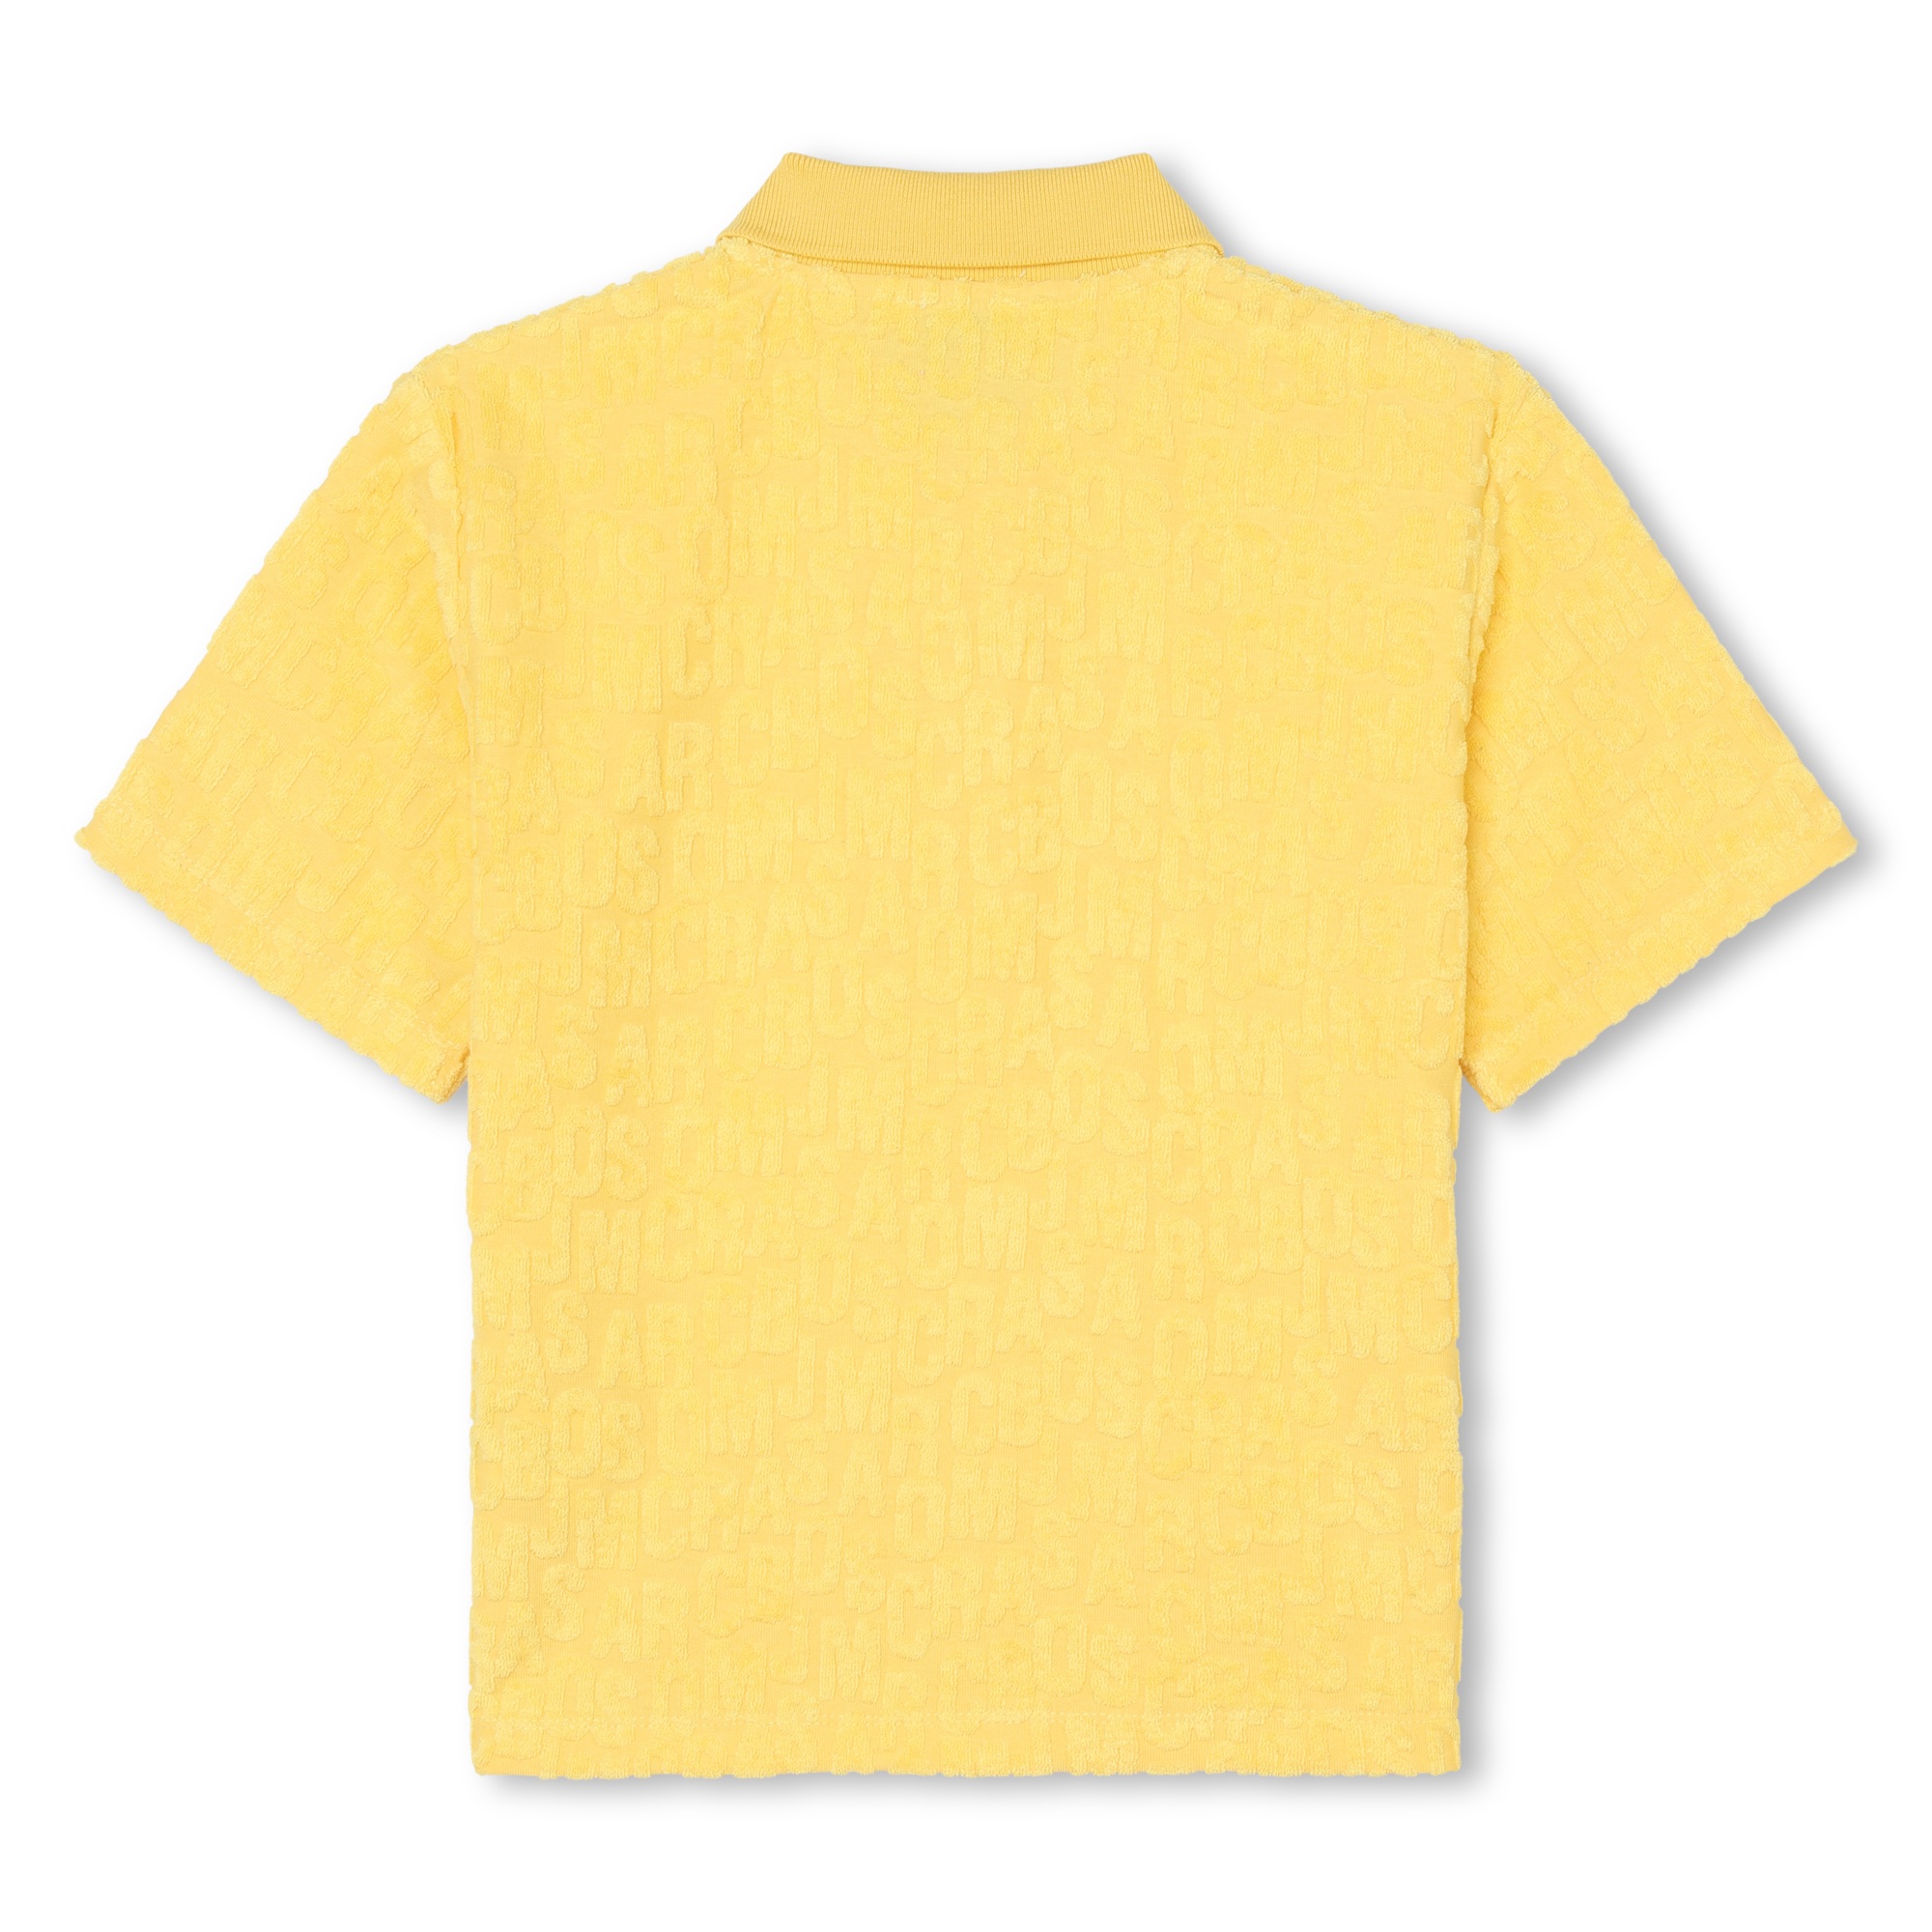 Kurzarm-Polo-Shirt aus Frottee MARC JACOBS Für JUNGE